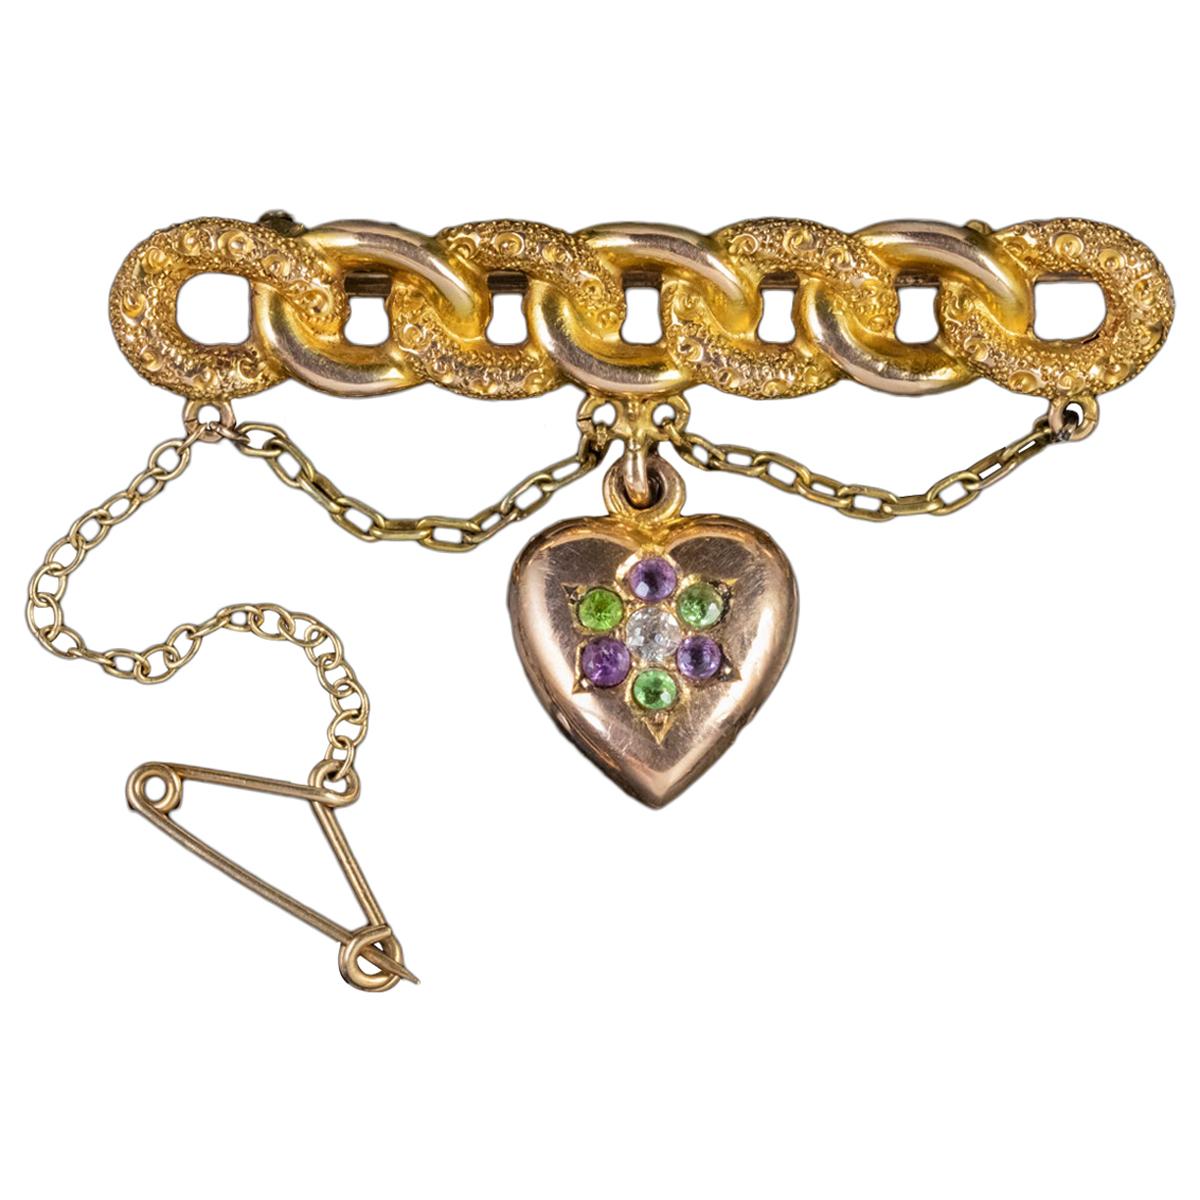 Antique Edwardian Suffragette Heart Brooch 15 Carat Gold, circa 1910